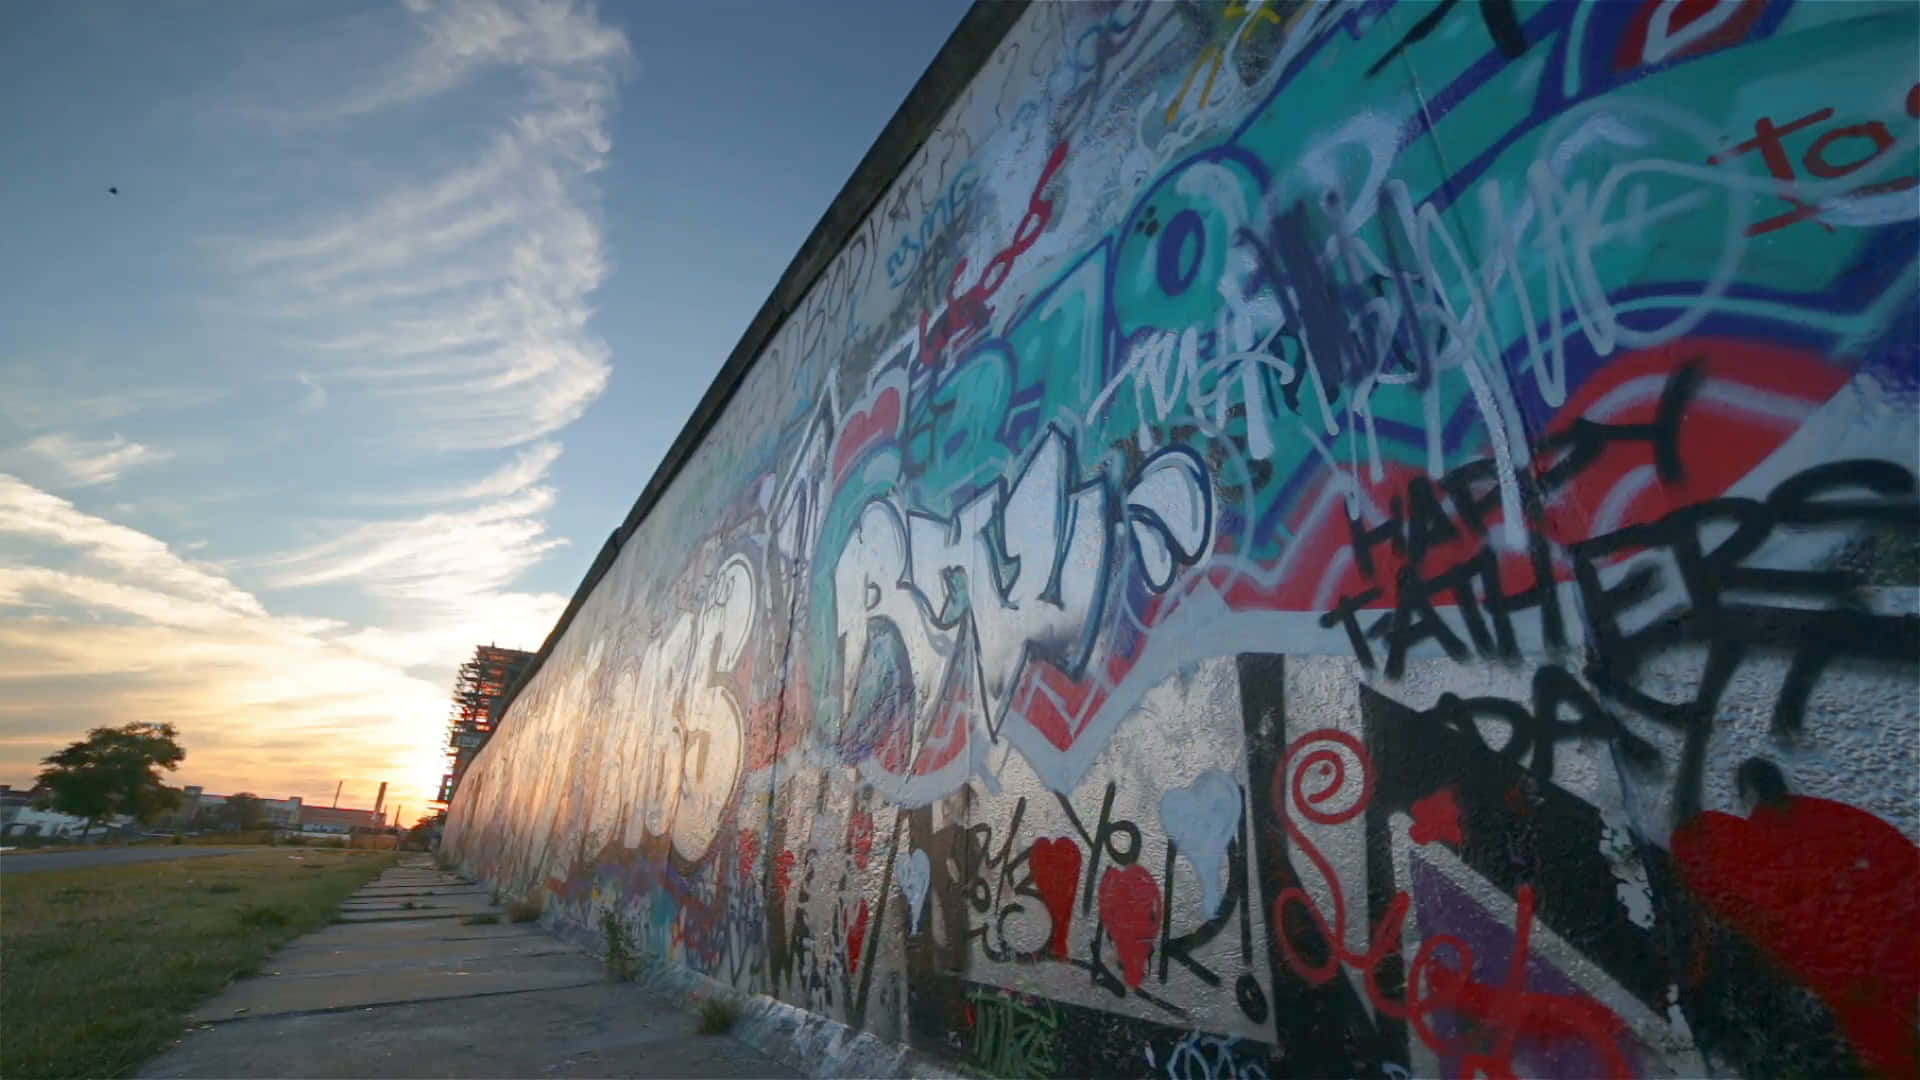 Berlin Wall Graffiti During Sunset Background